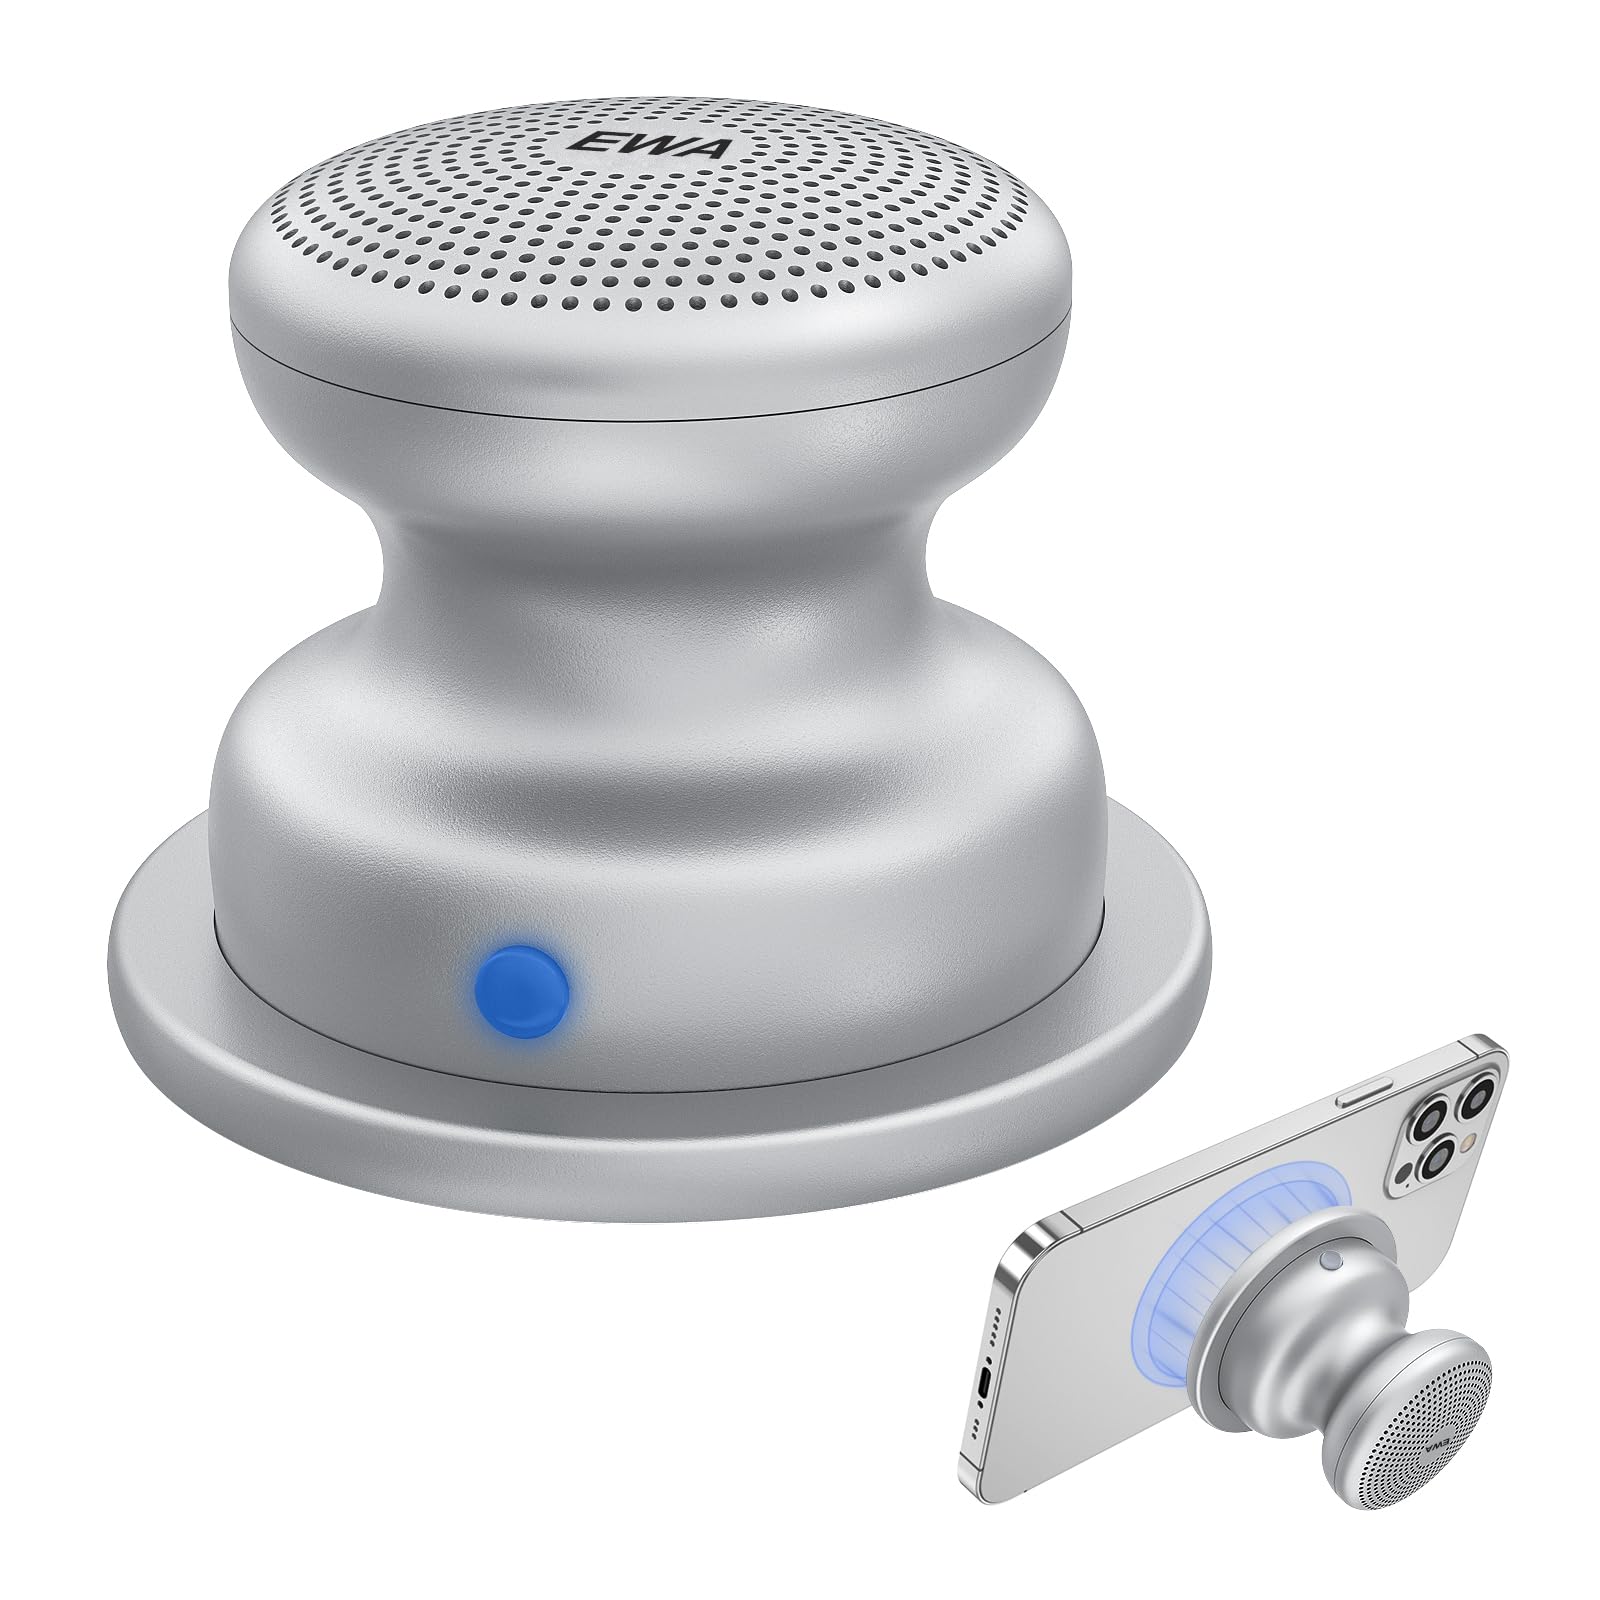 EWA A117 Bluetooth-Lautsprecher, klein, kabellos, Magnetfuß, leistungsstark, wasserdicht, tragbar, leichtes Anbringen an Metalloberflächen, kompatibel mit iPhone 14/13/12, überall einsetzbar, Silber